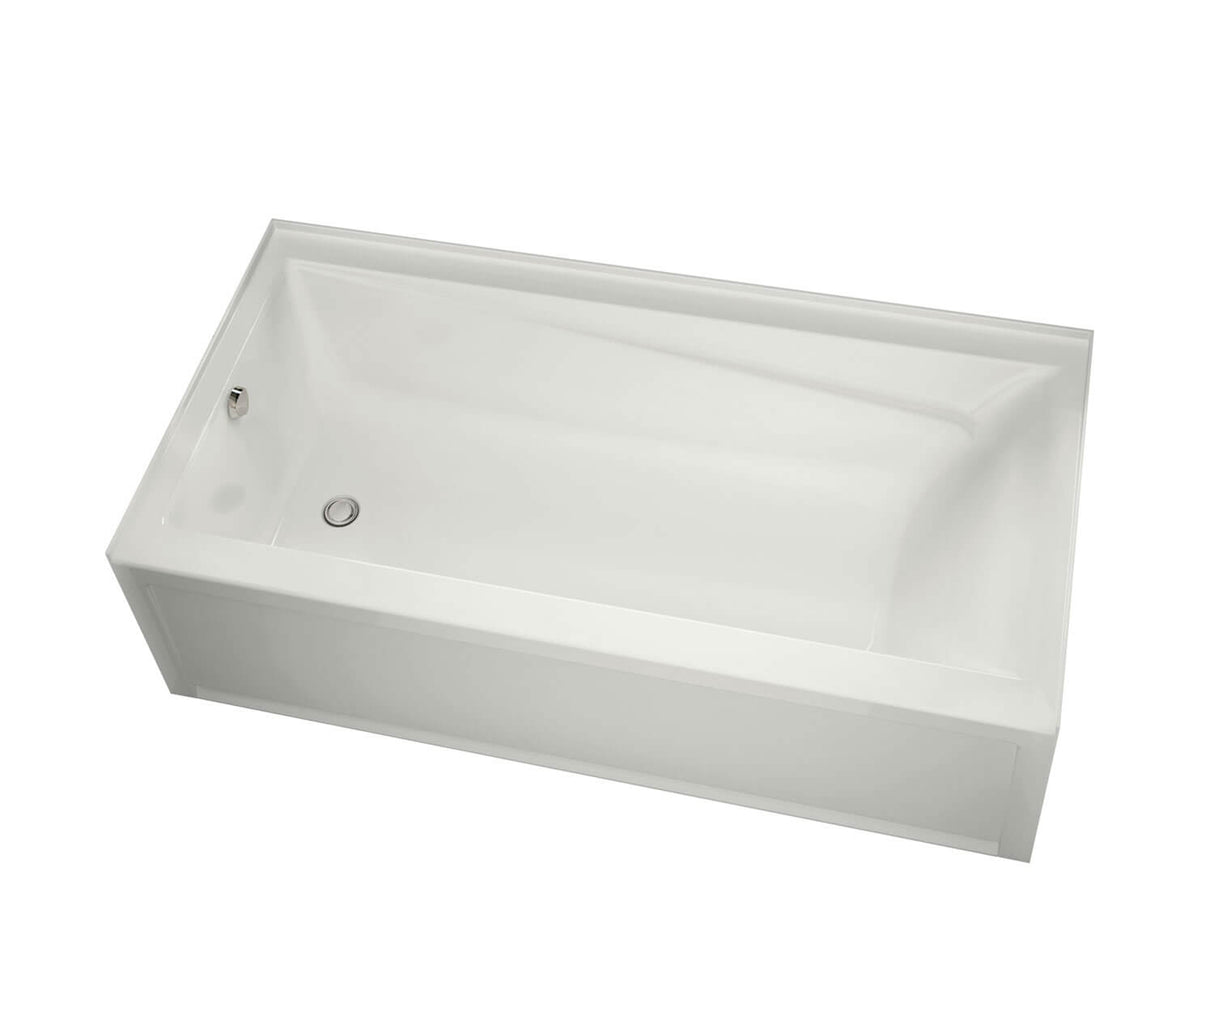 MAAX 106179-L-097-001 Exhibit 6636 IFS Acrylic Alcove Left-Hand Drain Combined Whirlpool & Aeroeffect Bathtub in White